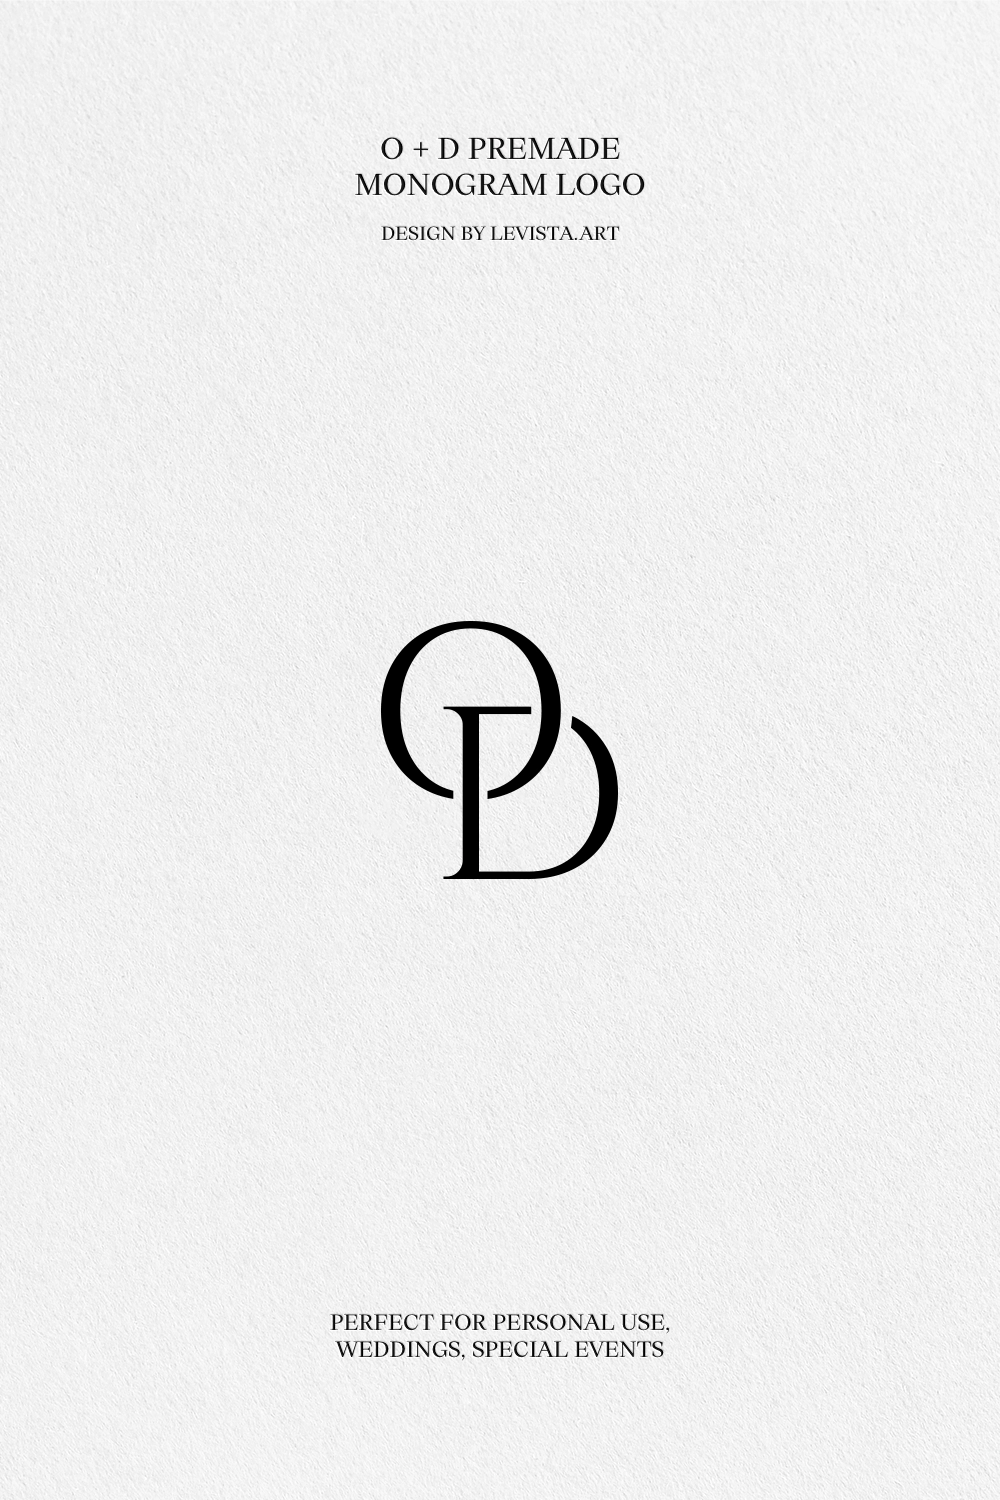 OD monogram logo design